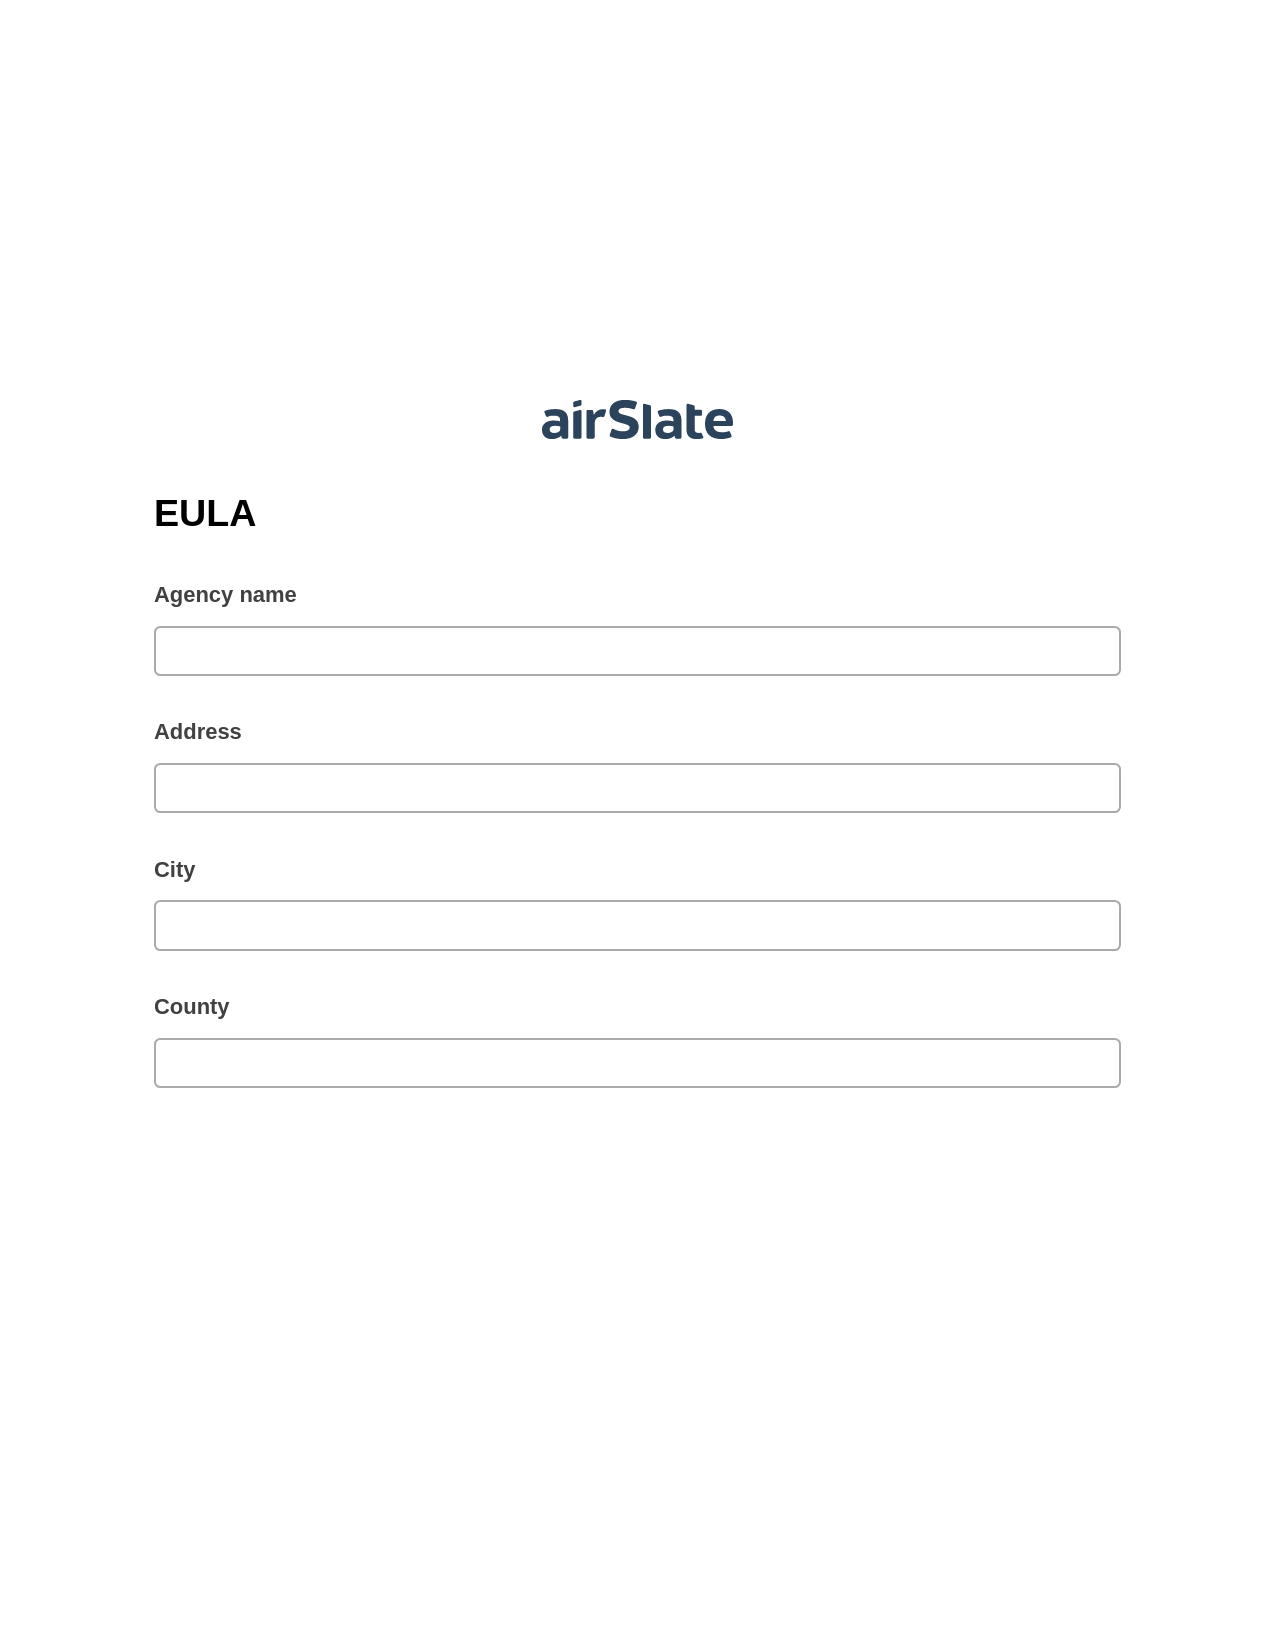 Multirole EULA Pre-fill from Google Sheet Dropdown Options Bot, Send a Slate to MS Dynamics 365 Contact Bot, Google Drive Bot